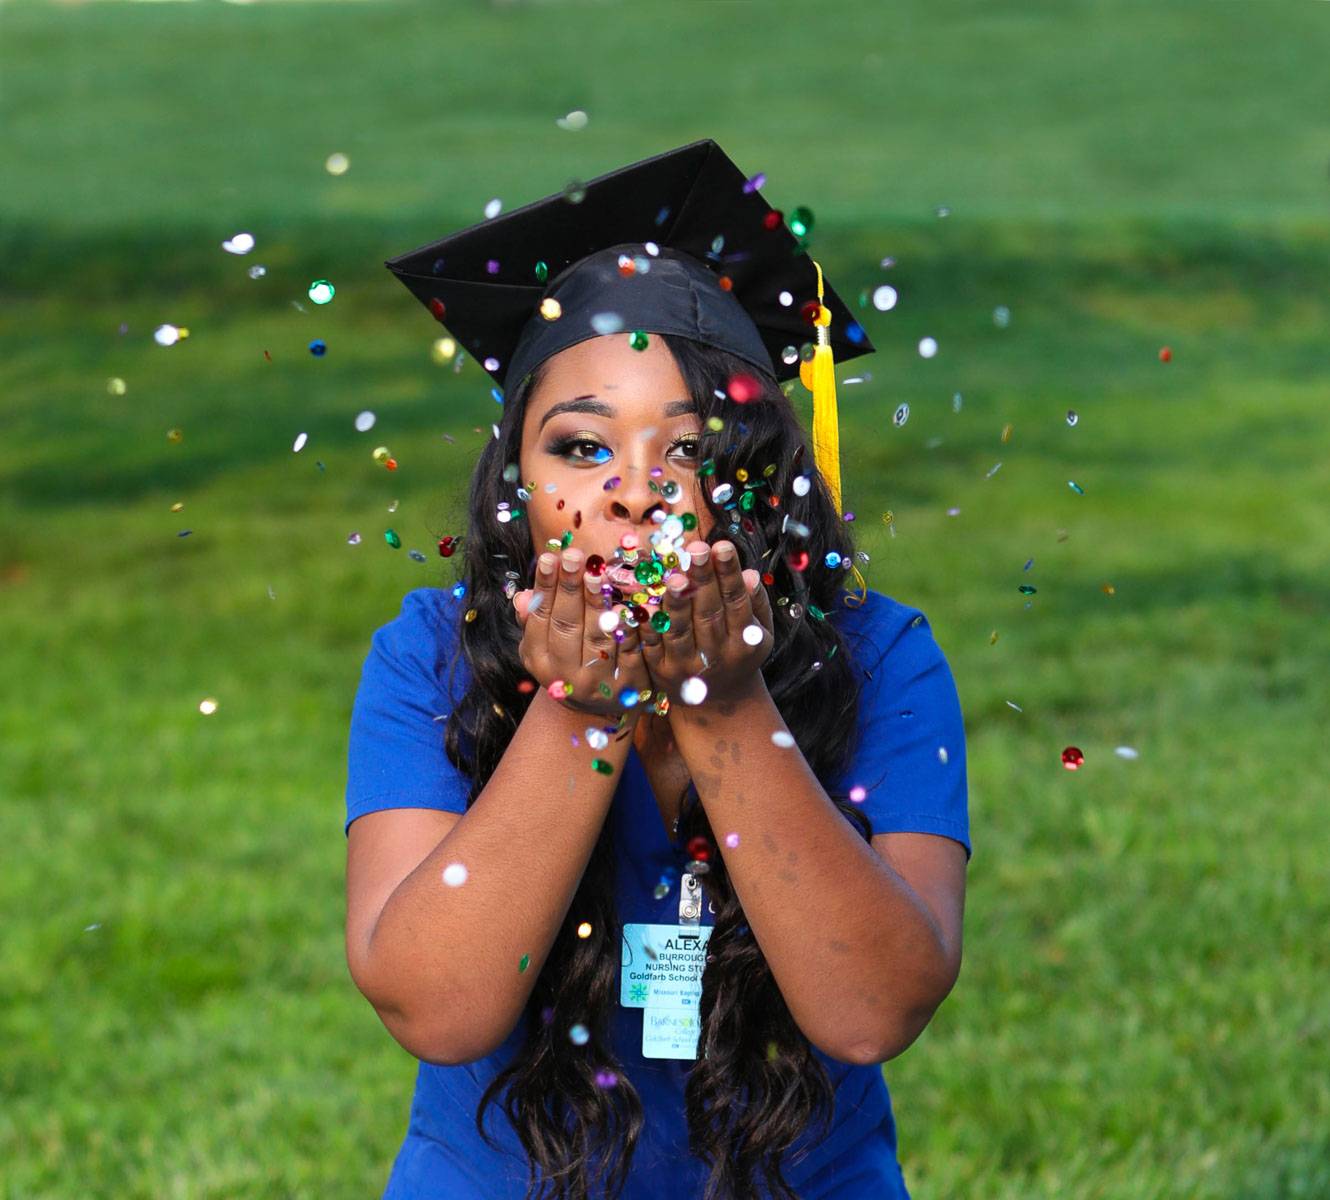 A newly graduate blowing confetti